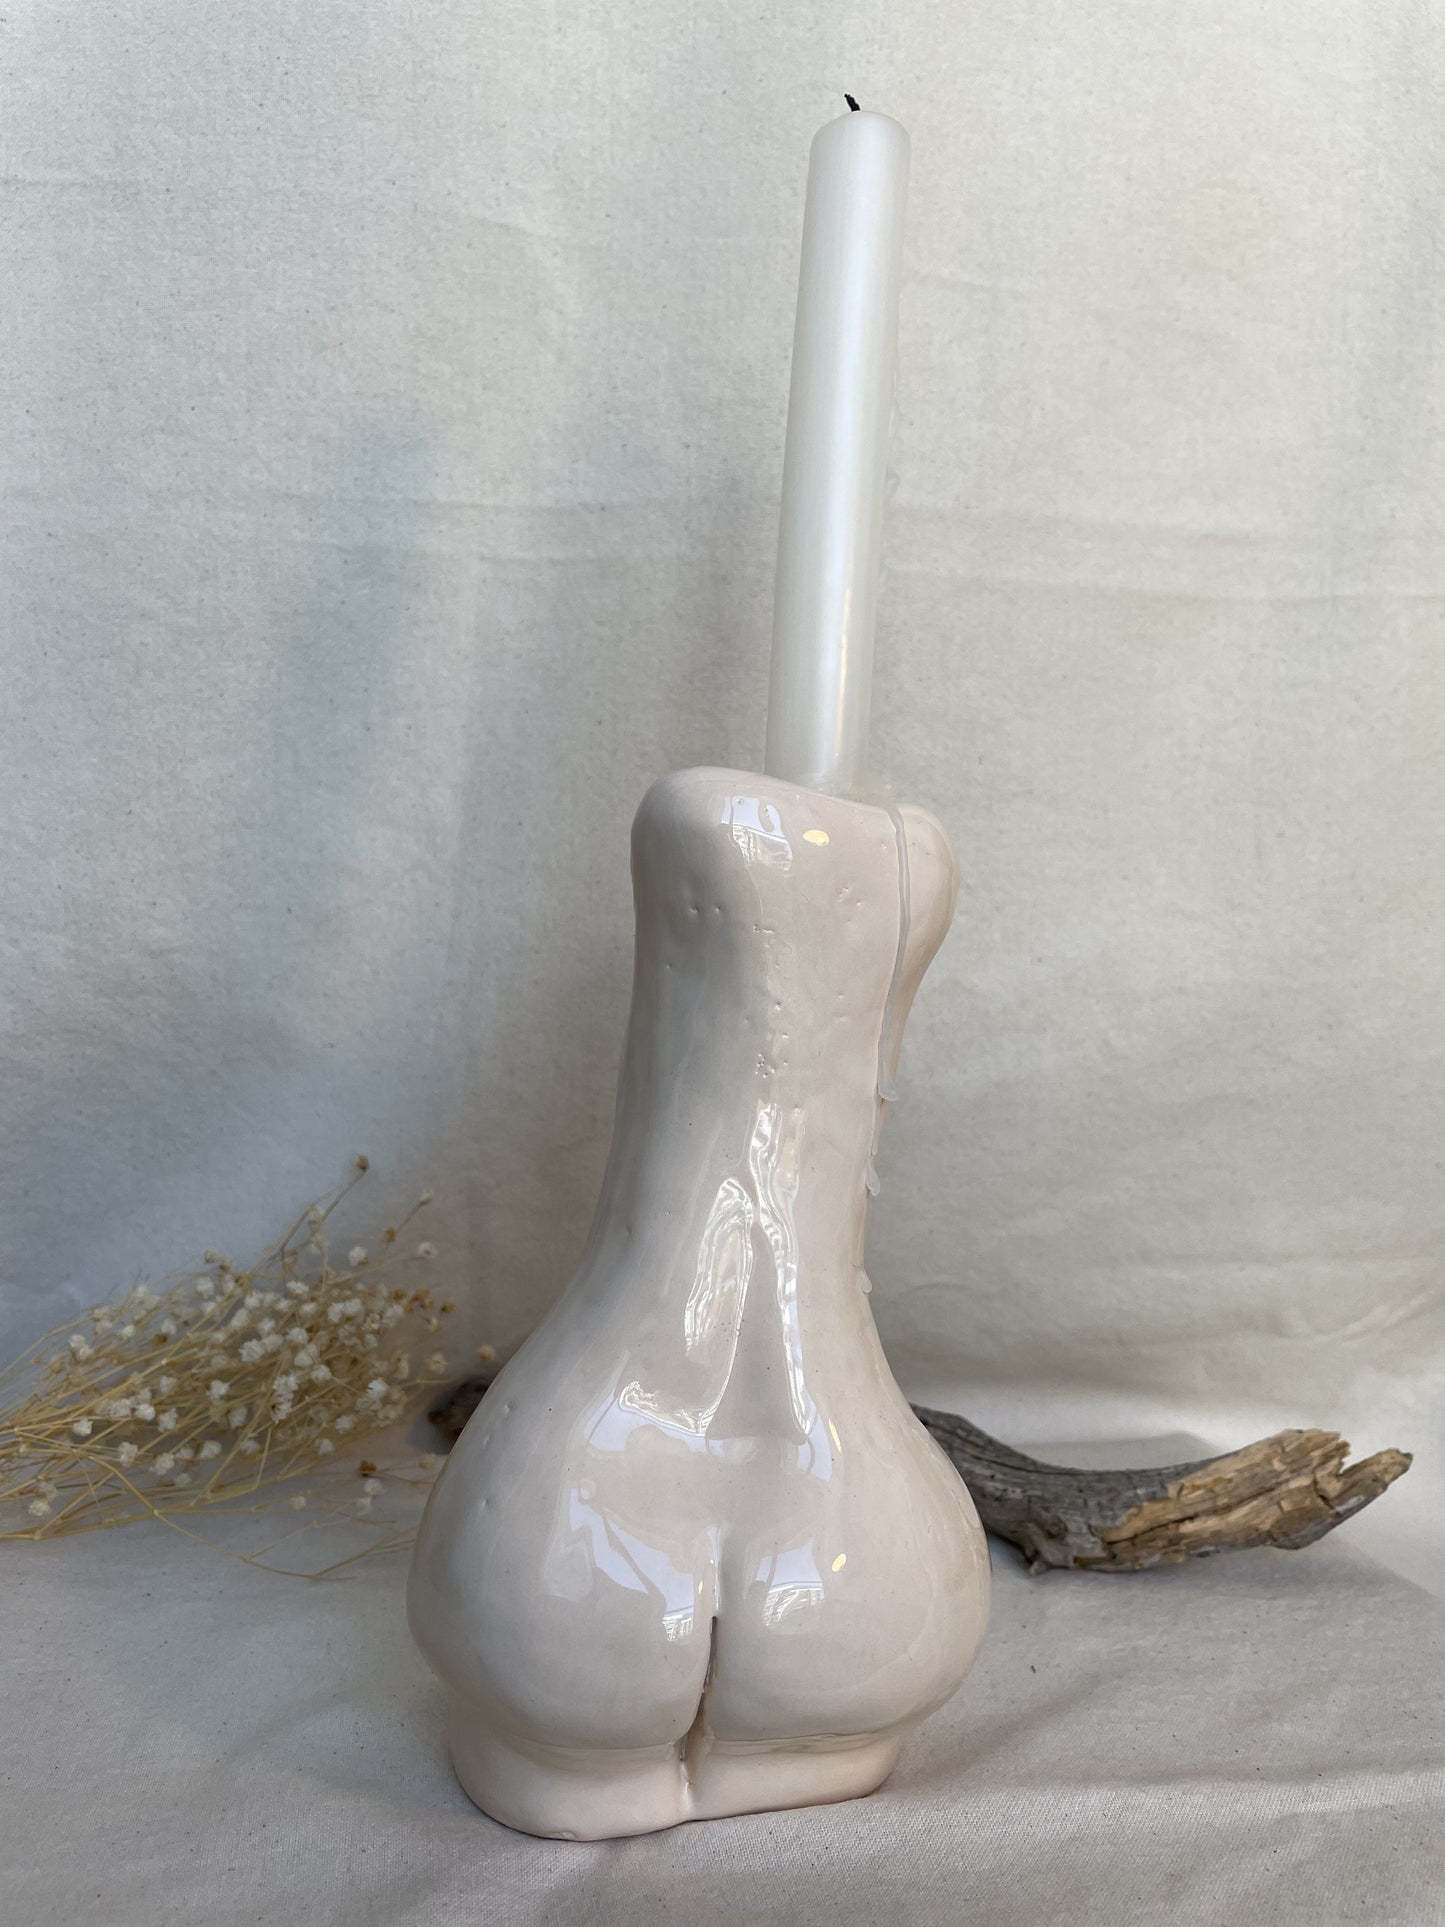 Mediterranean Woman Female Body Ceramic Candle Holder